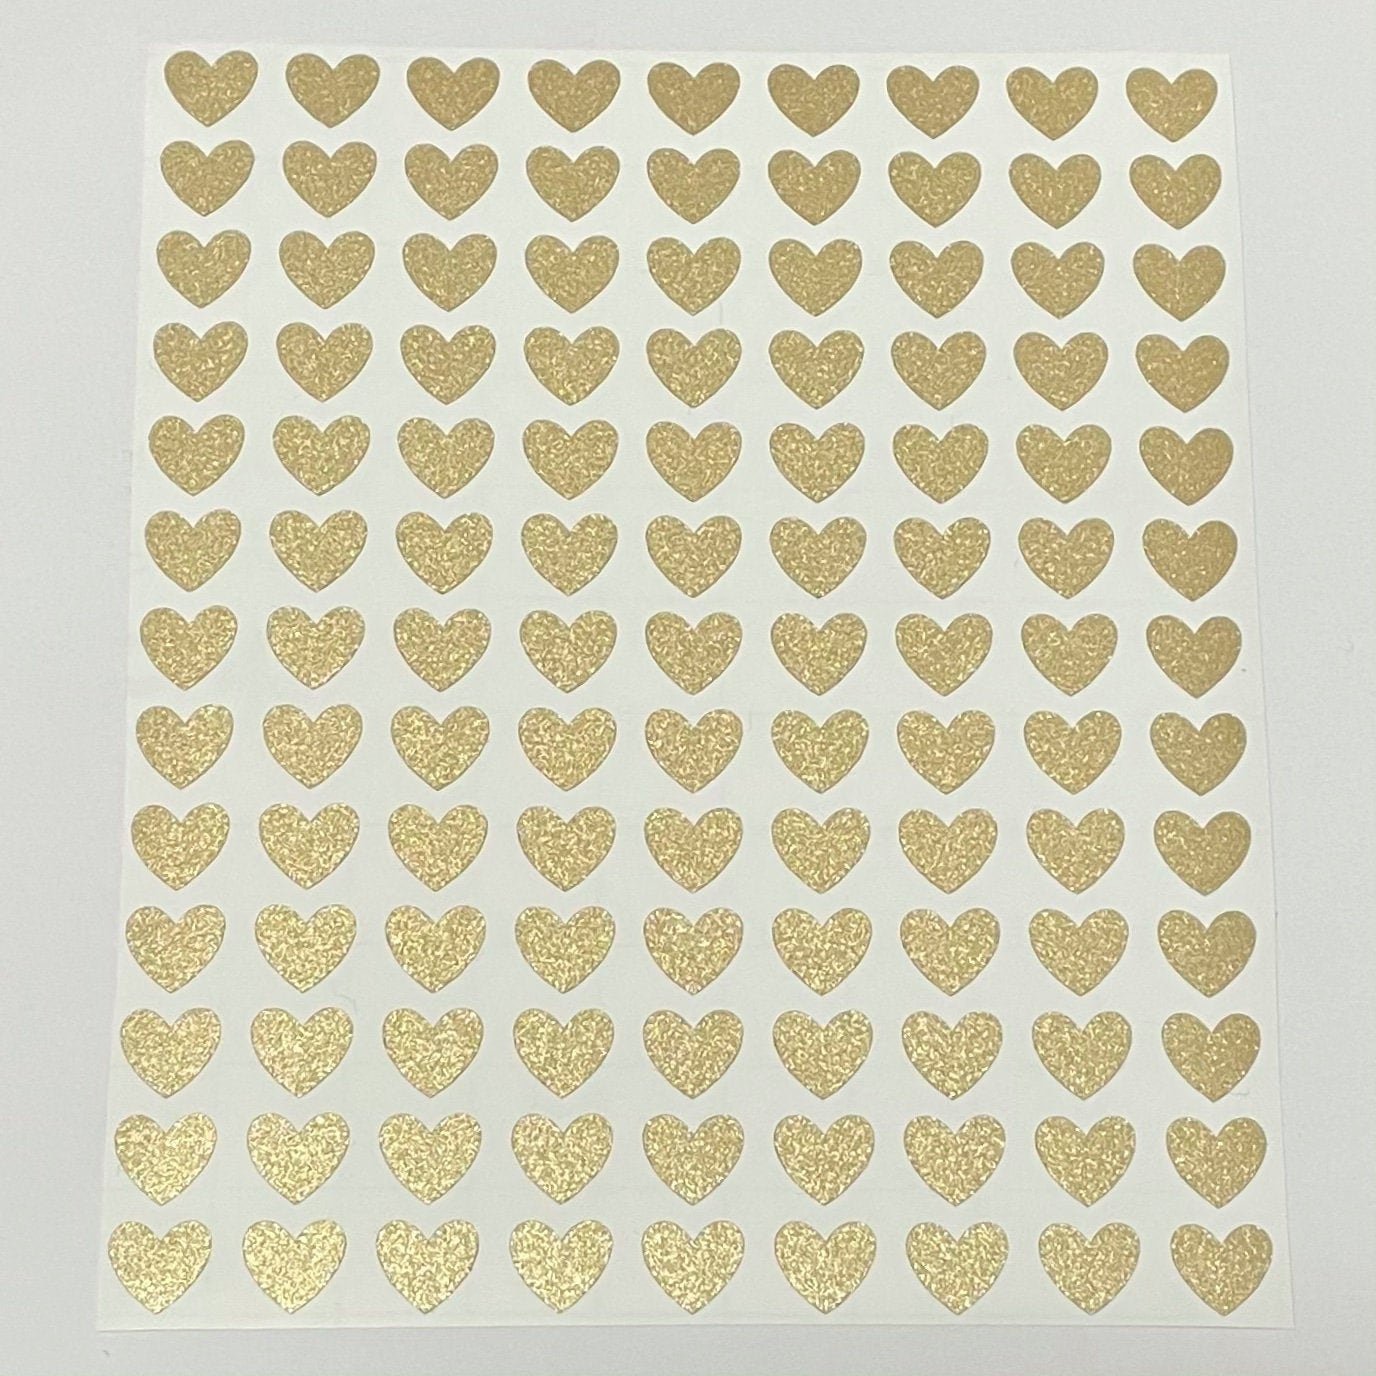 Glitter Heart Frames Clipart Digital Planner Stickers, Ombre